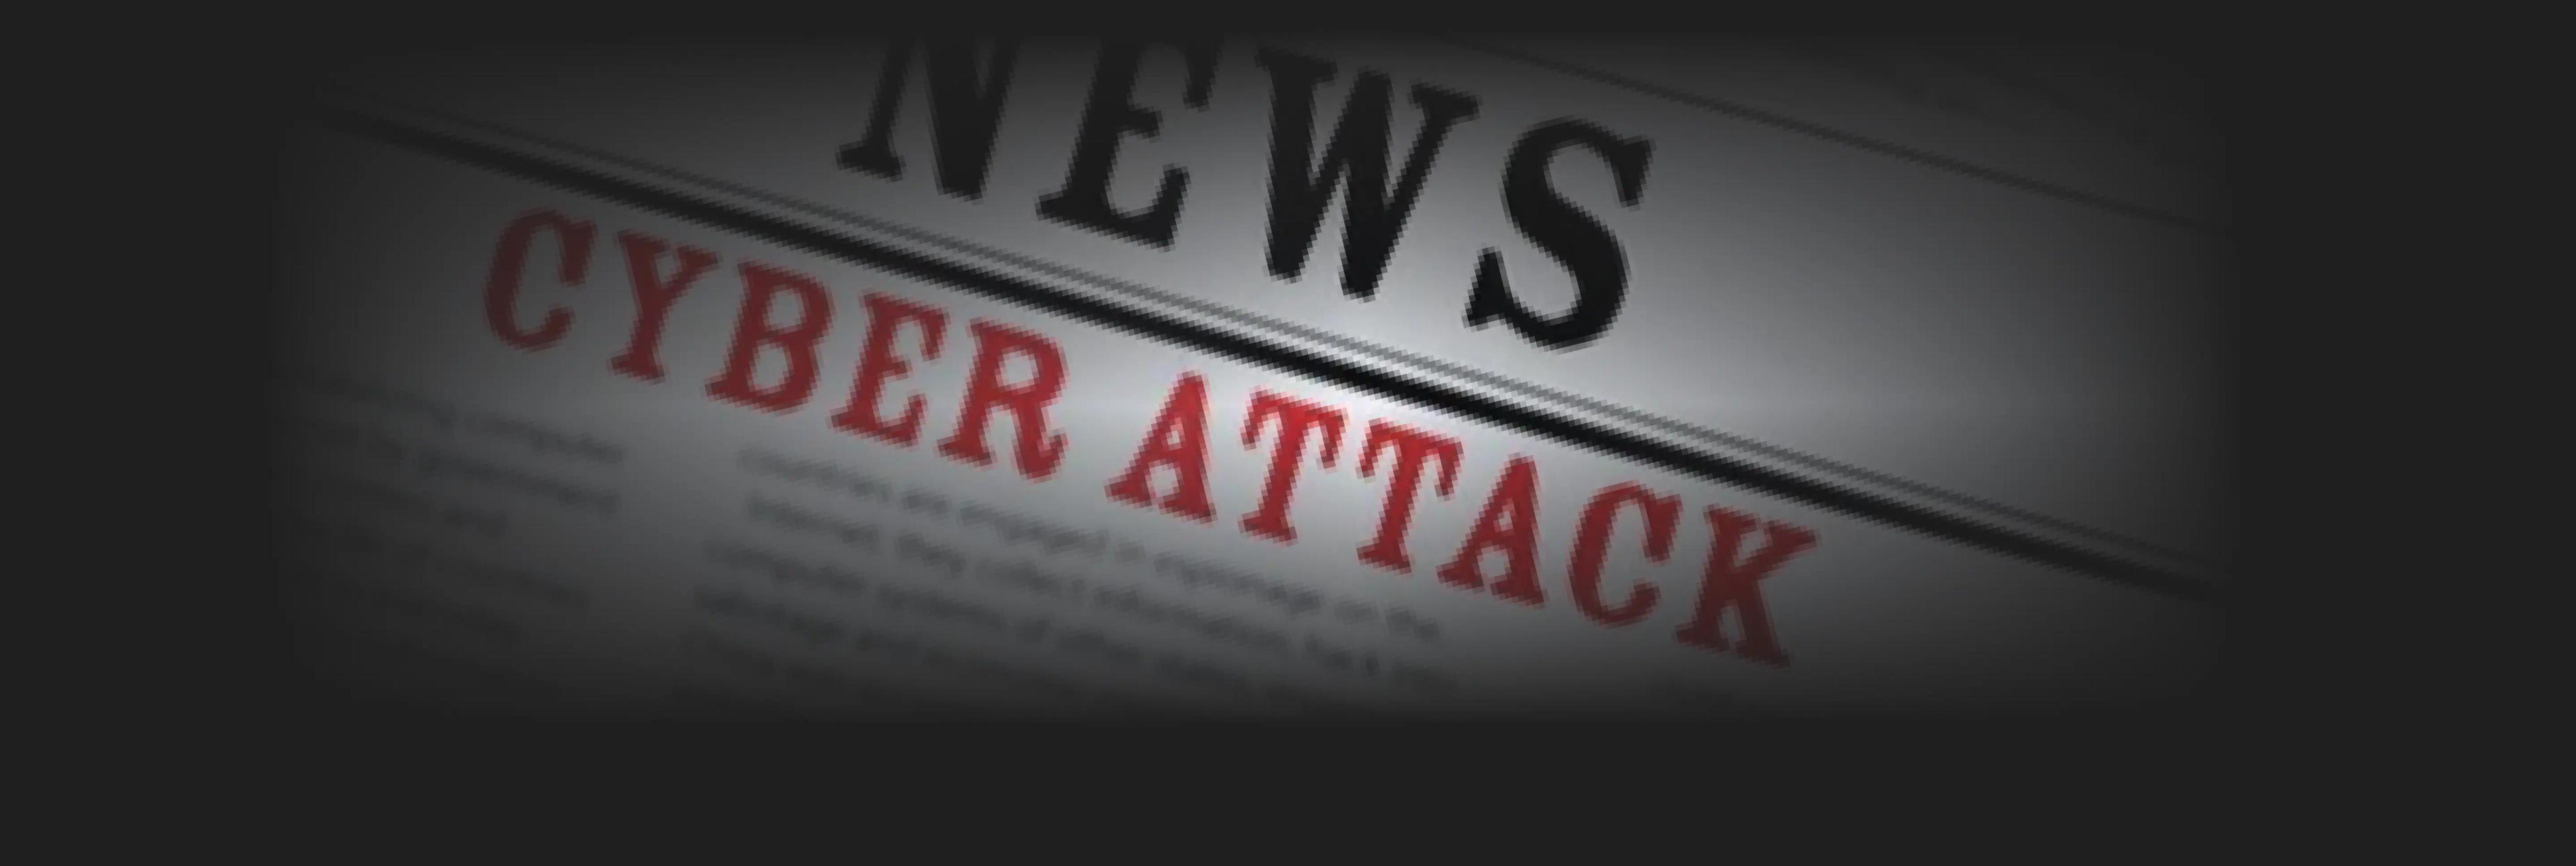 news cyber attack